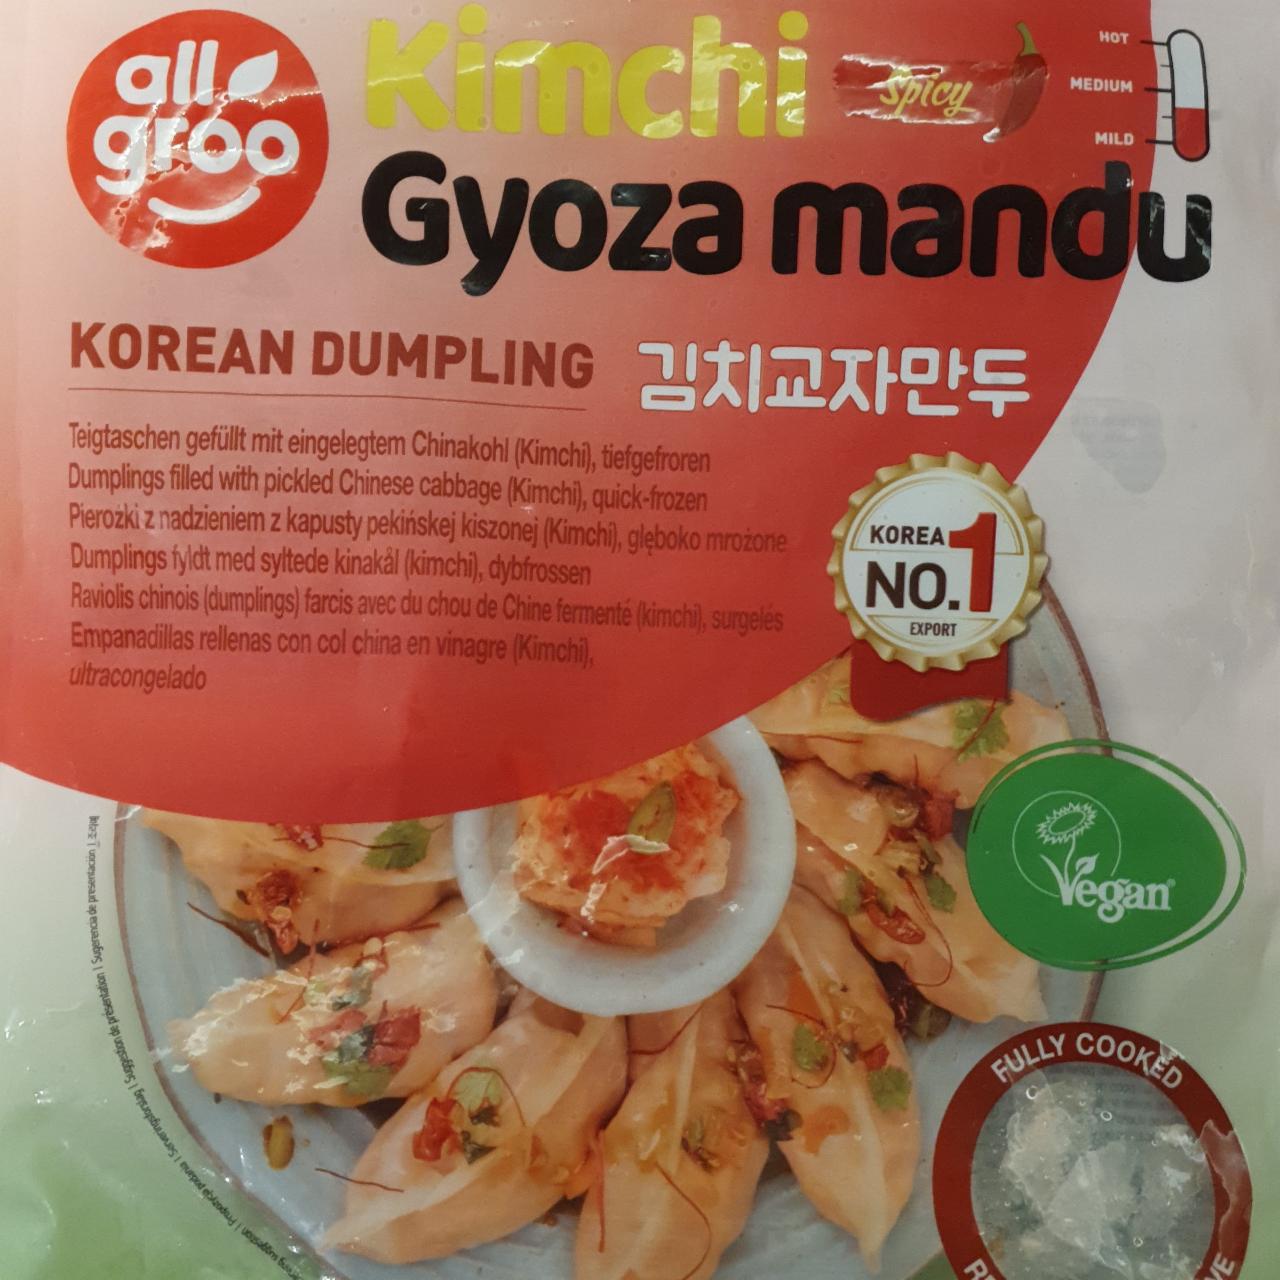 Fotografie - Kimchi Gyoza mandu korean dumpling All groo